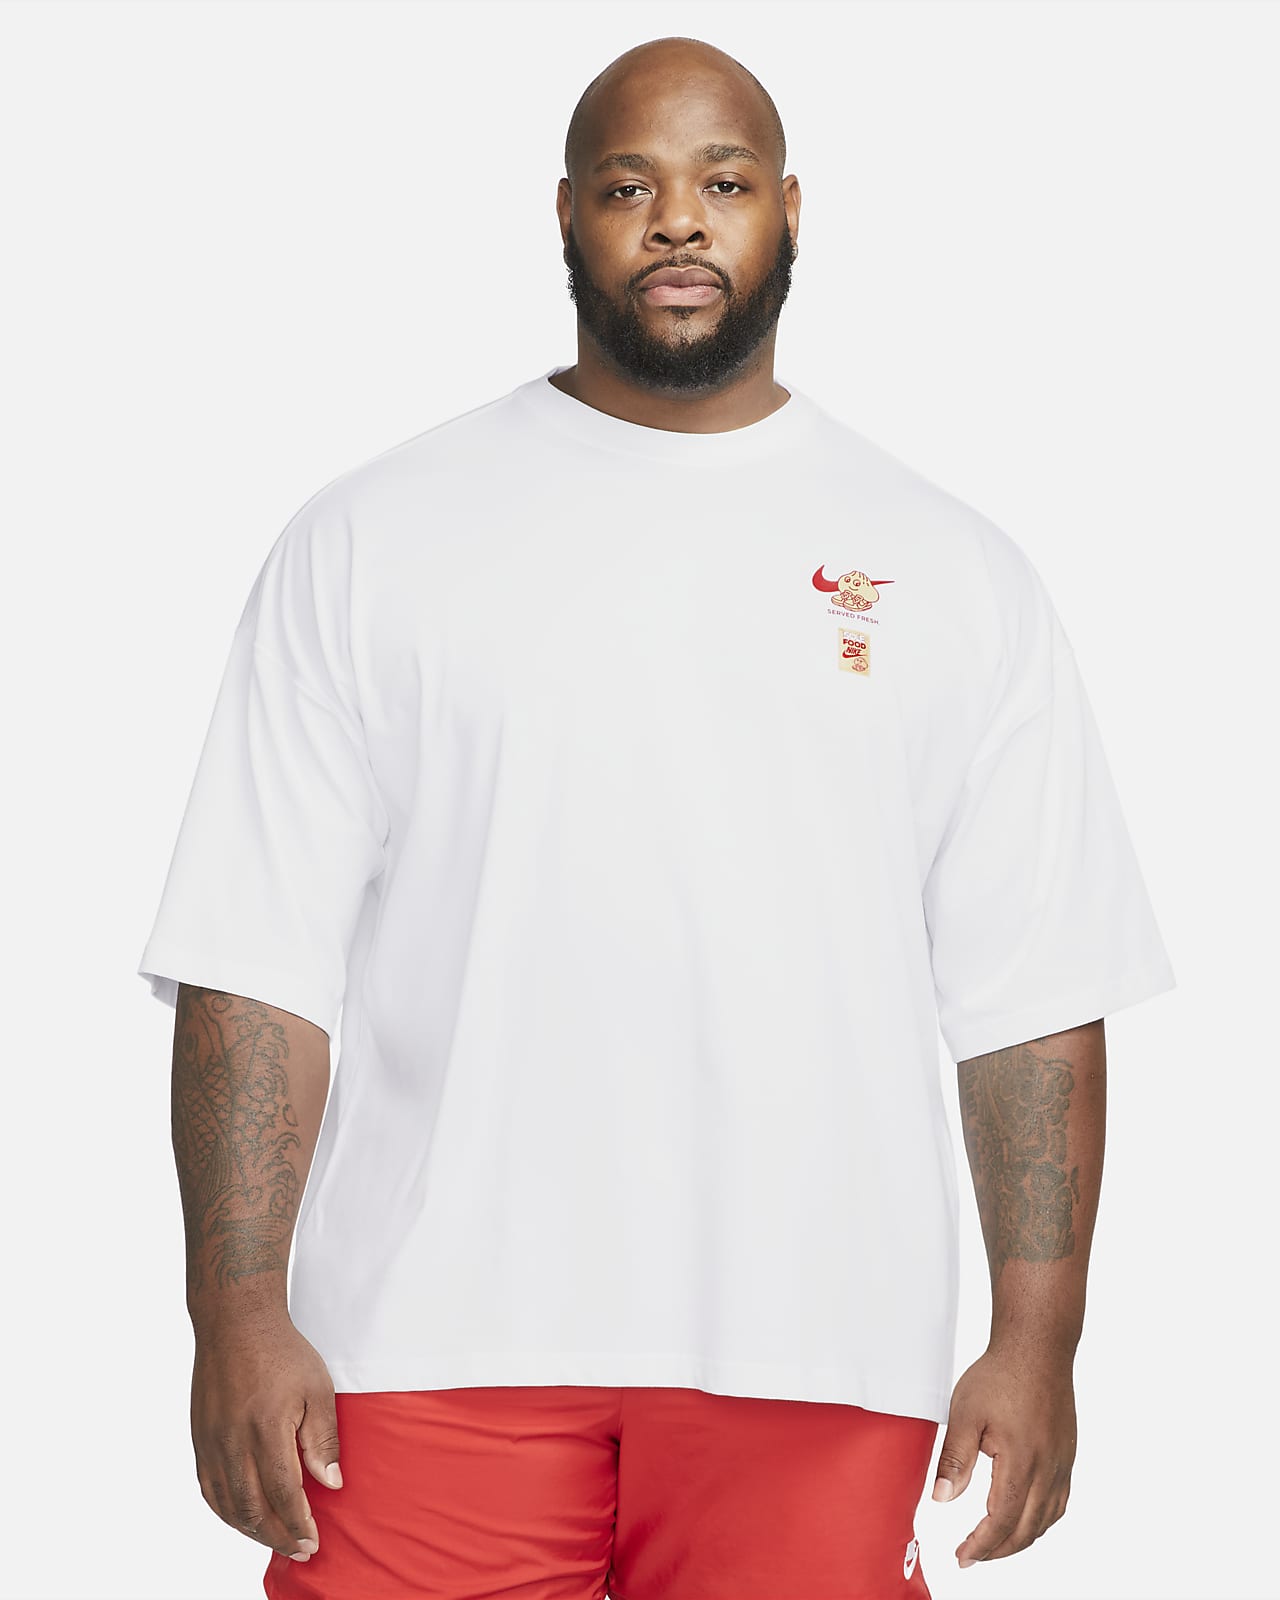 Nike Men's T-Shirt - Grey - XXL